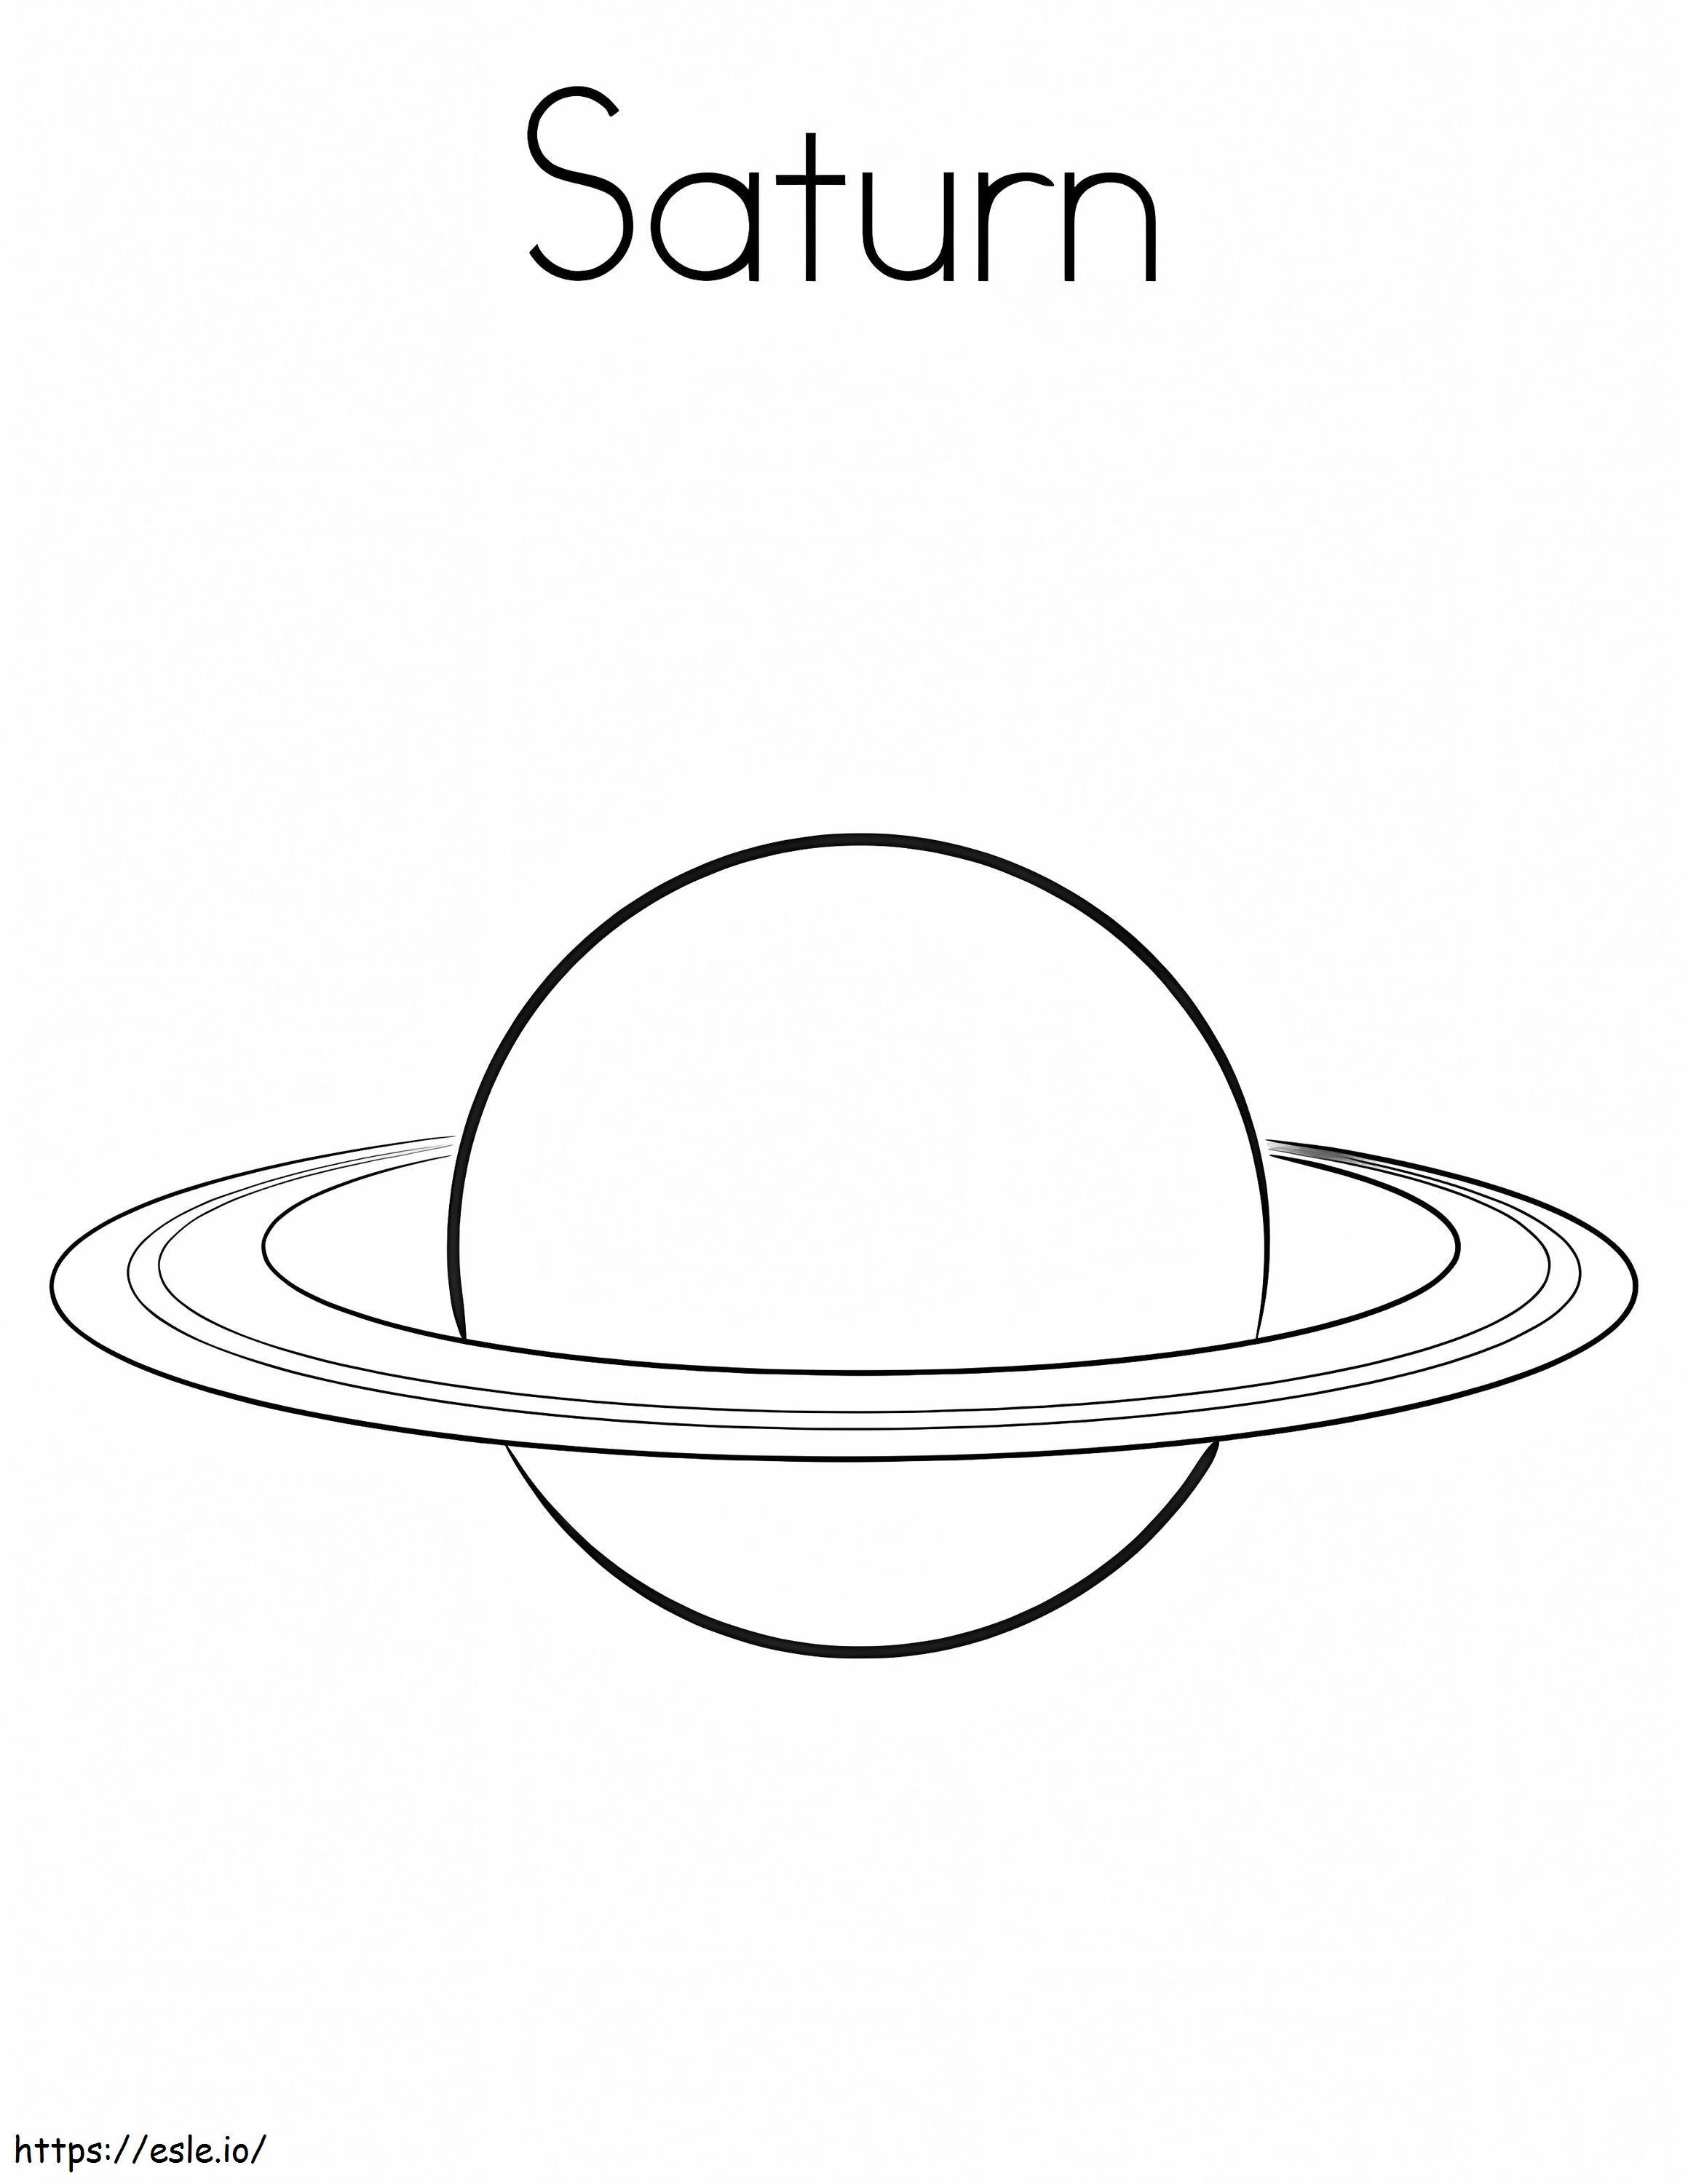 Coloriage Saturne normale à imprimer dessin